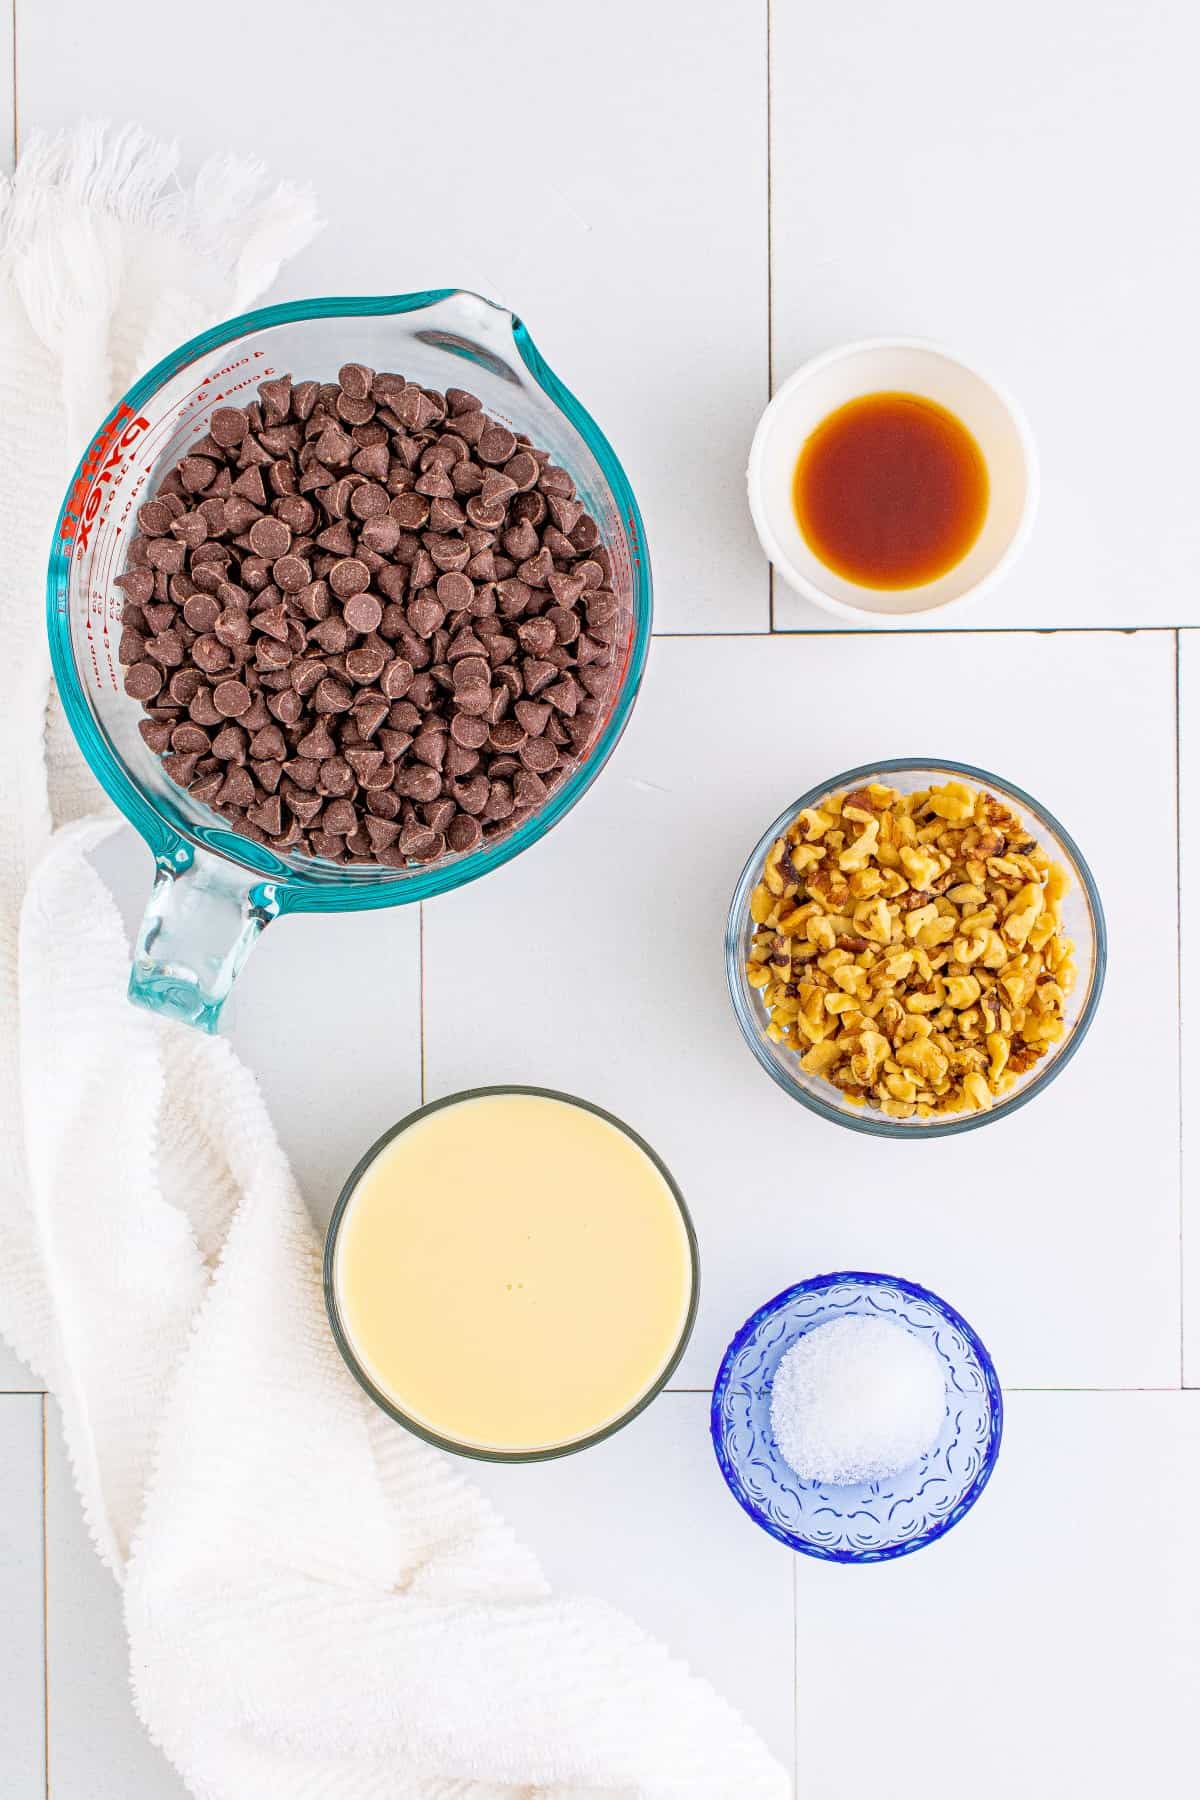 Ingredients for Easy Chocolate Walnut Fudge. 